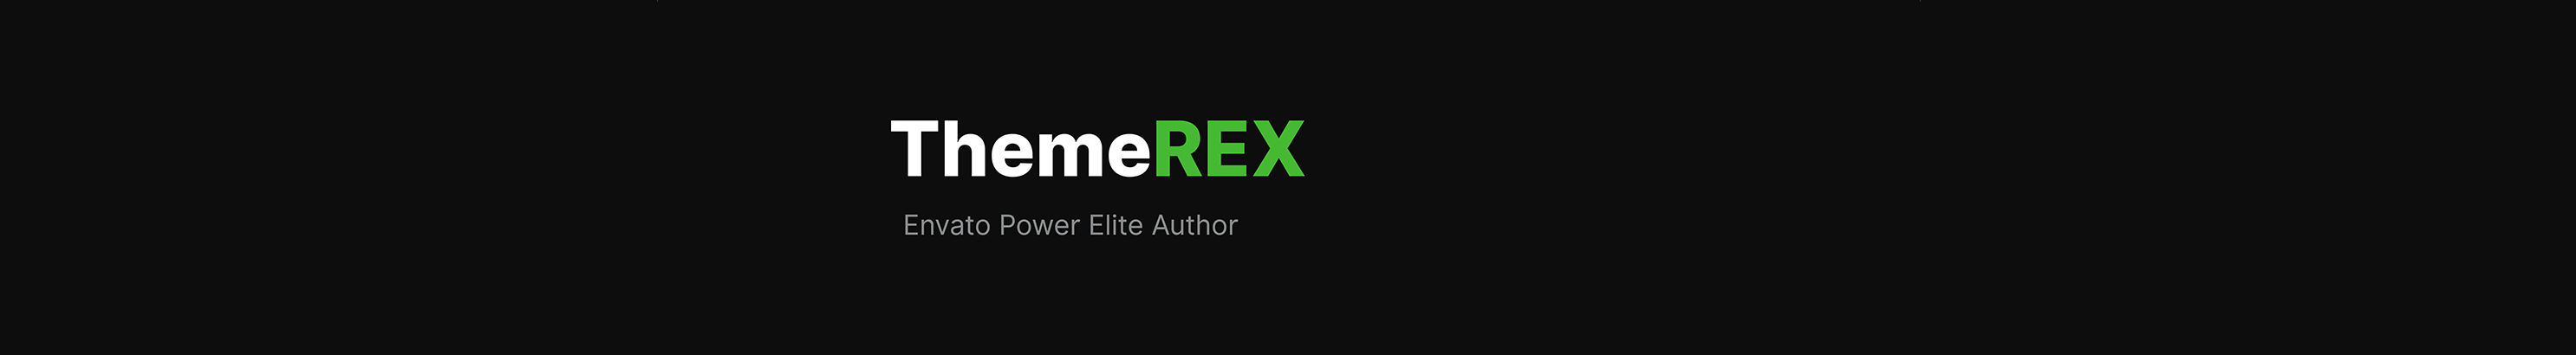 ThemeREX Web Development's profile banner